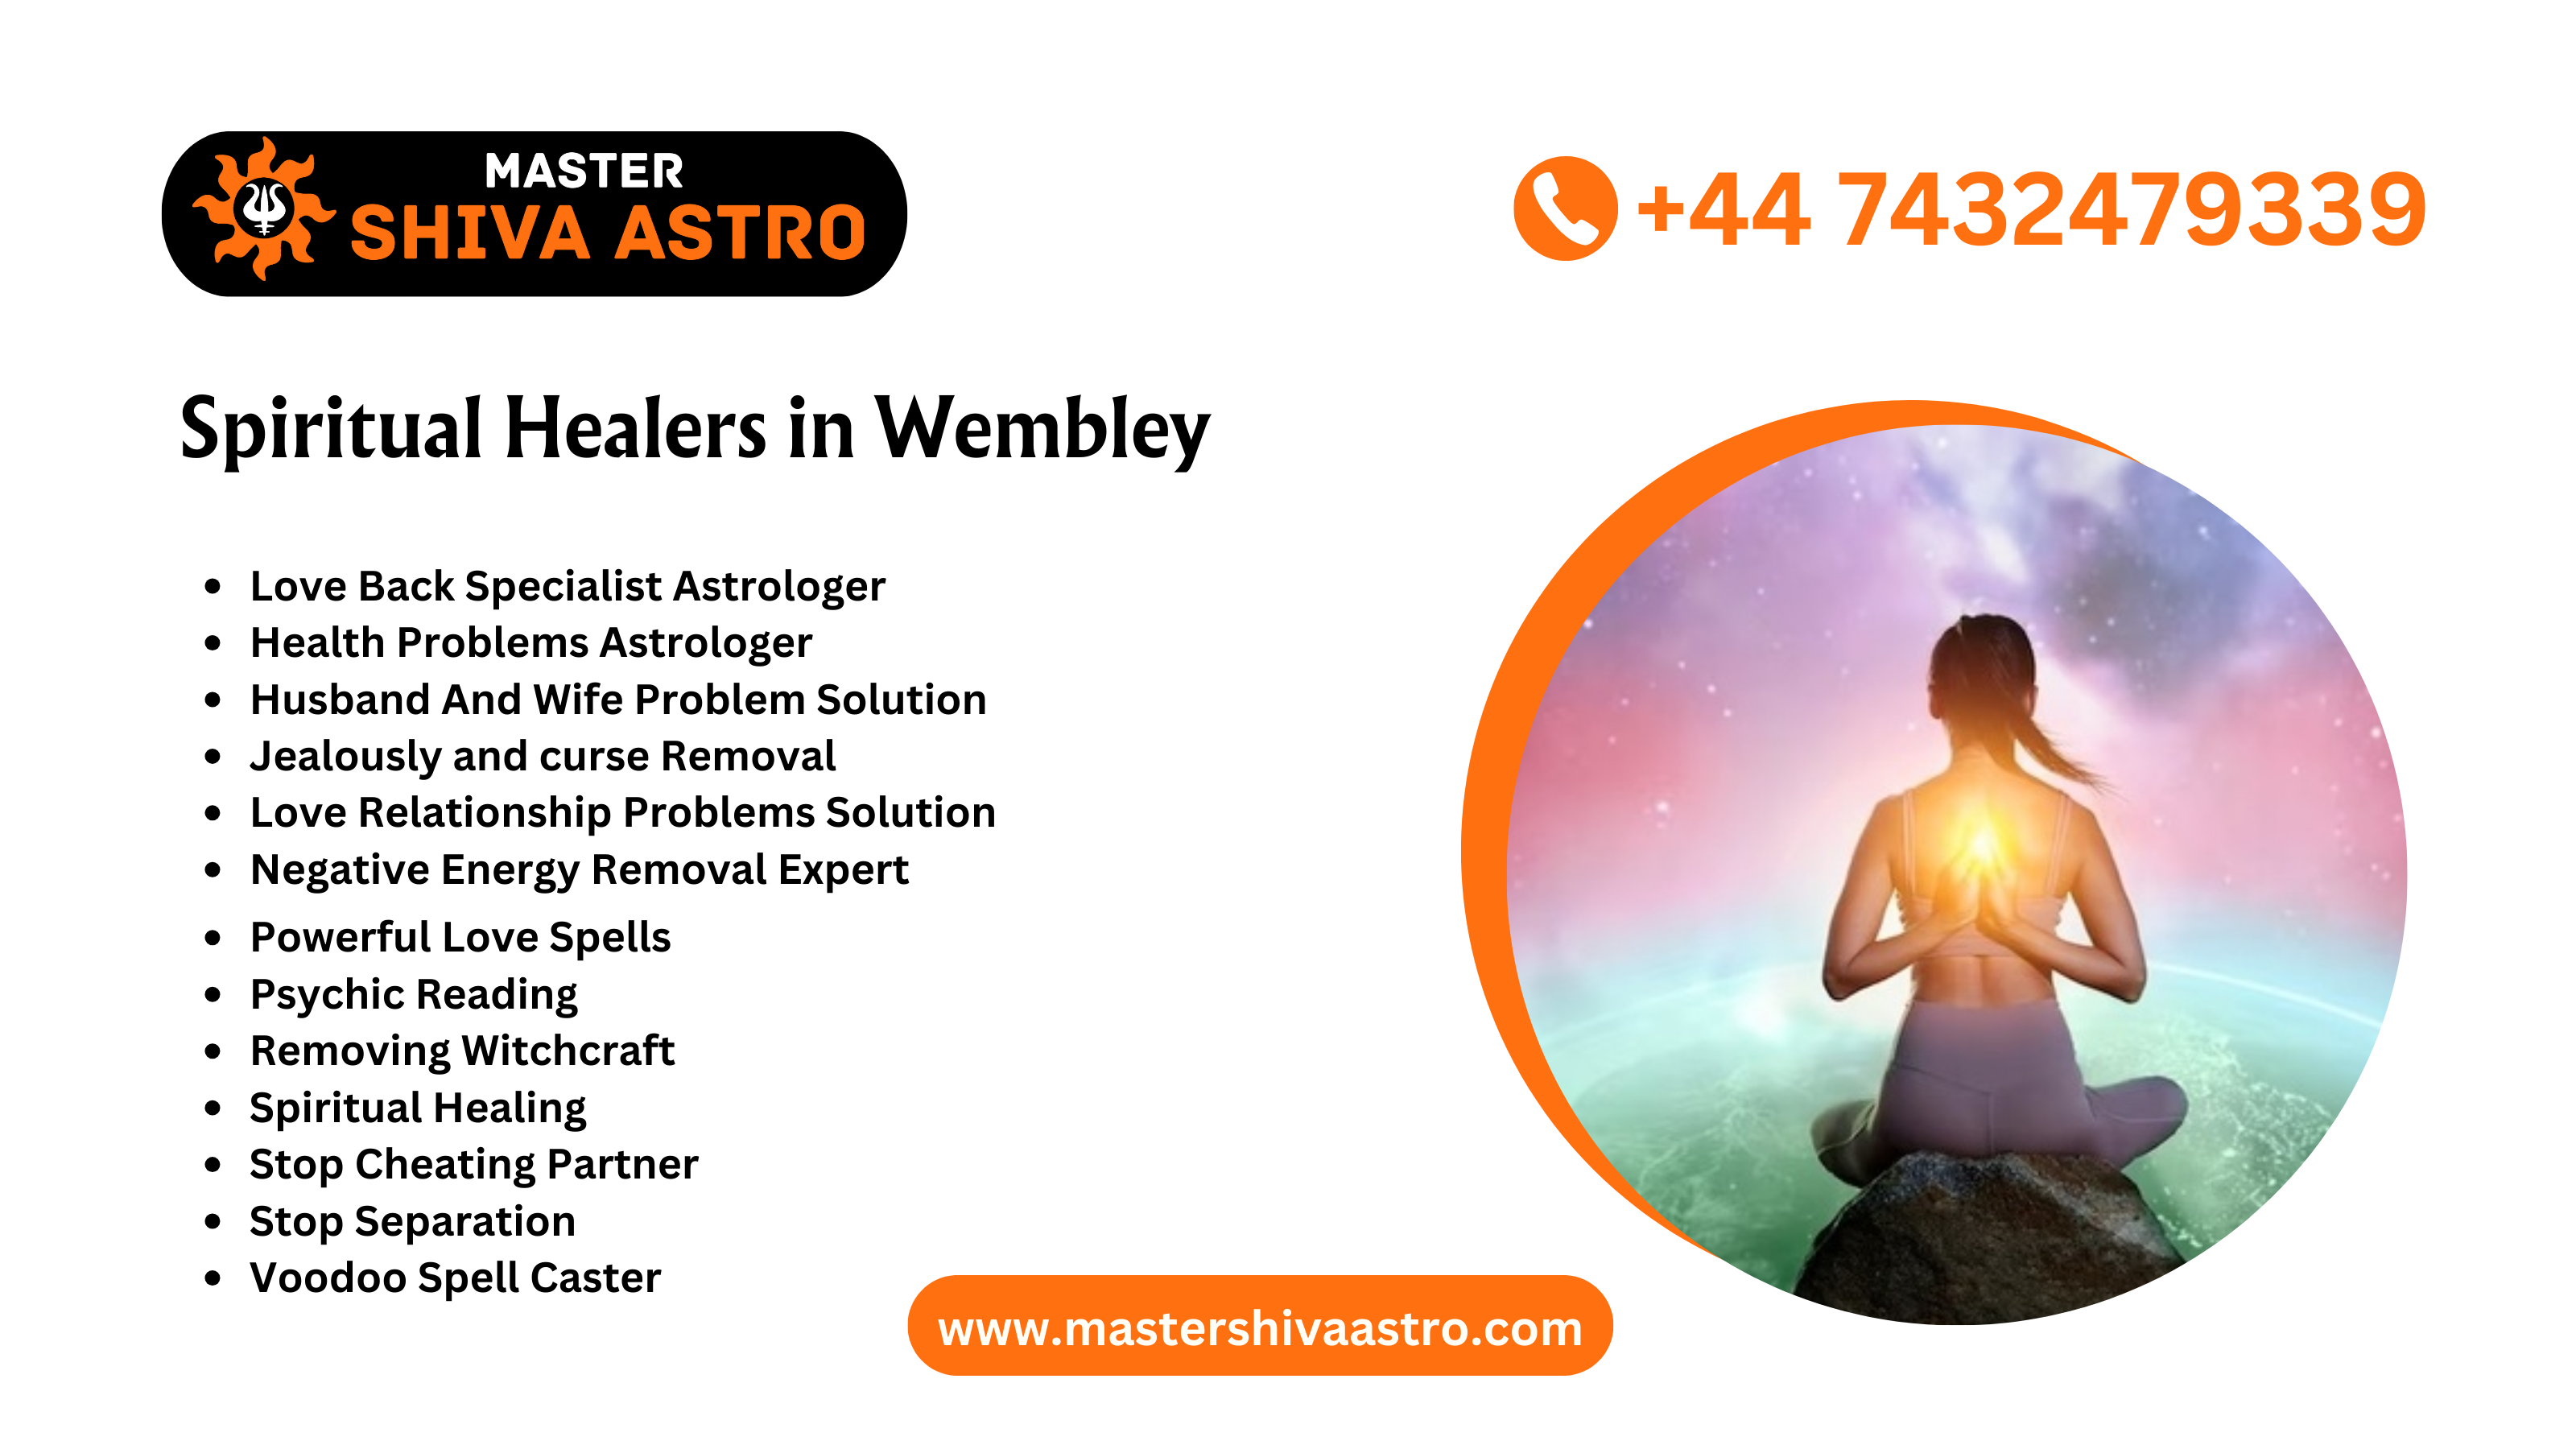 Spiritual Healers Specialist in Wembley - Master Shiva